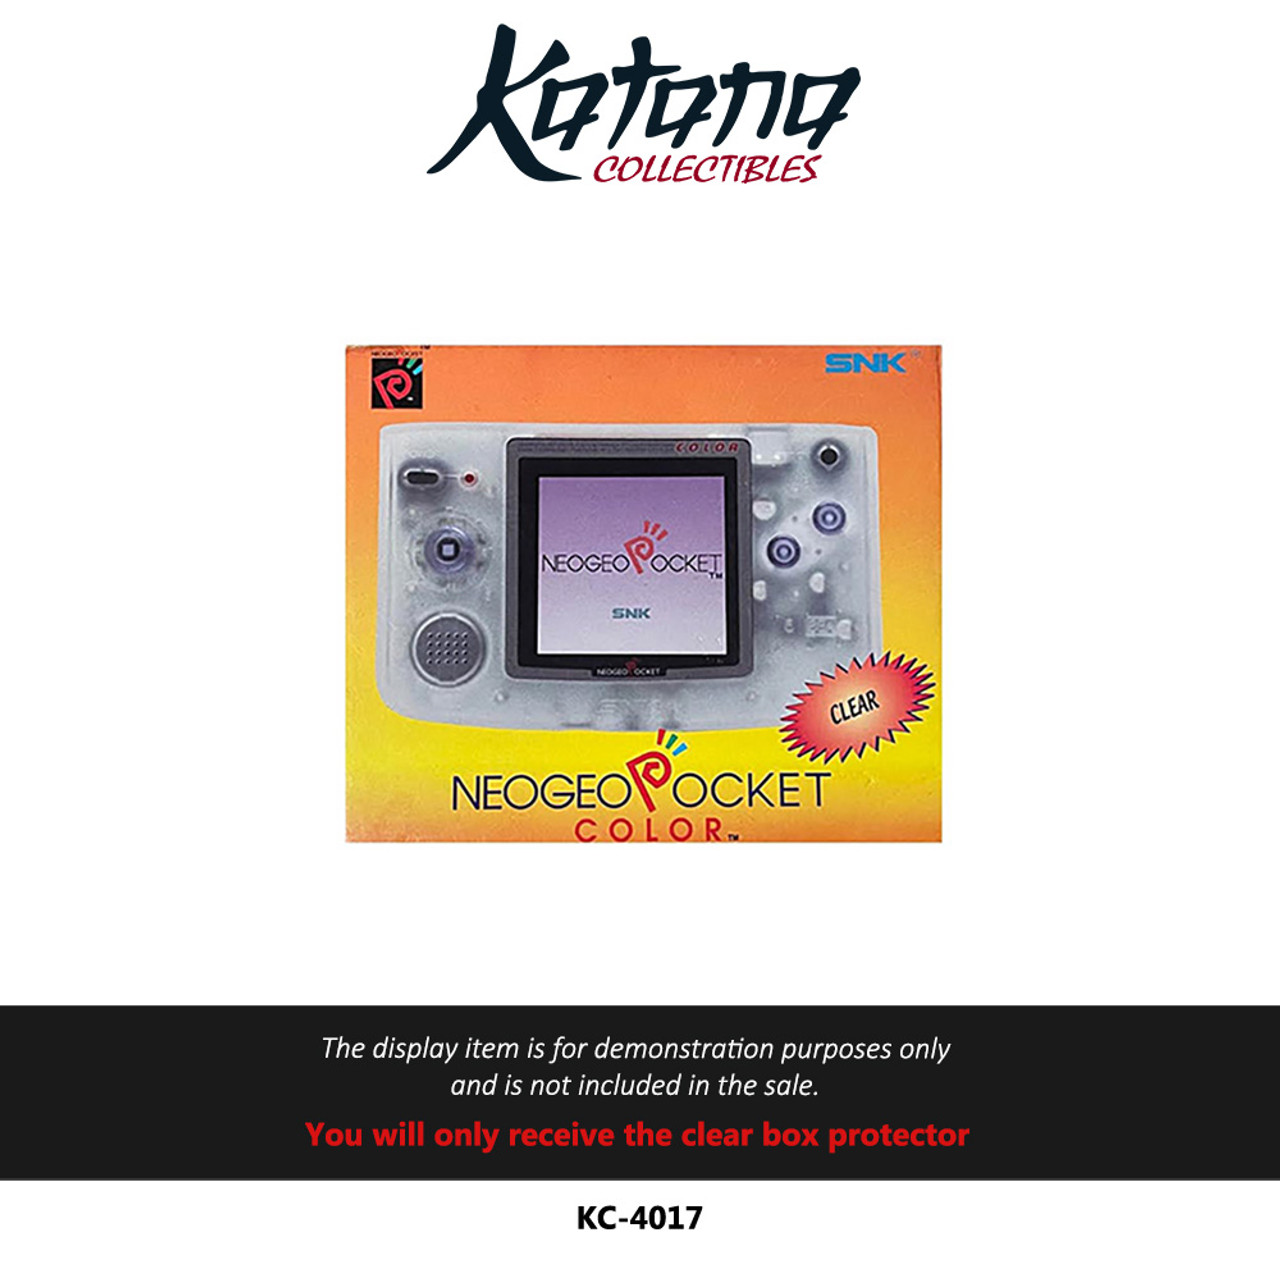 Katana Collectibles Protector For NeoGeo Pocket